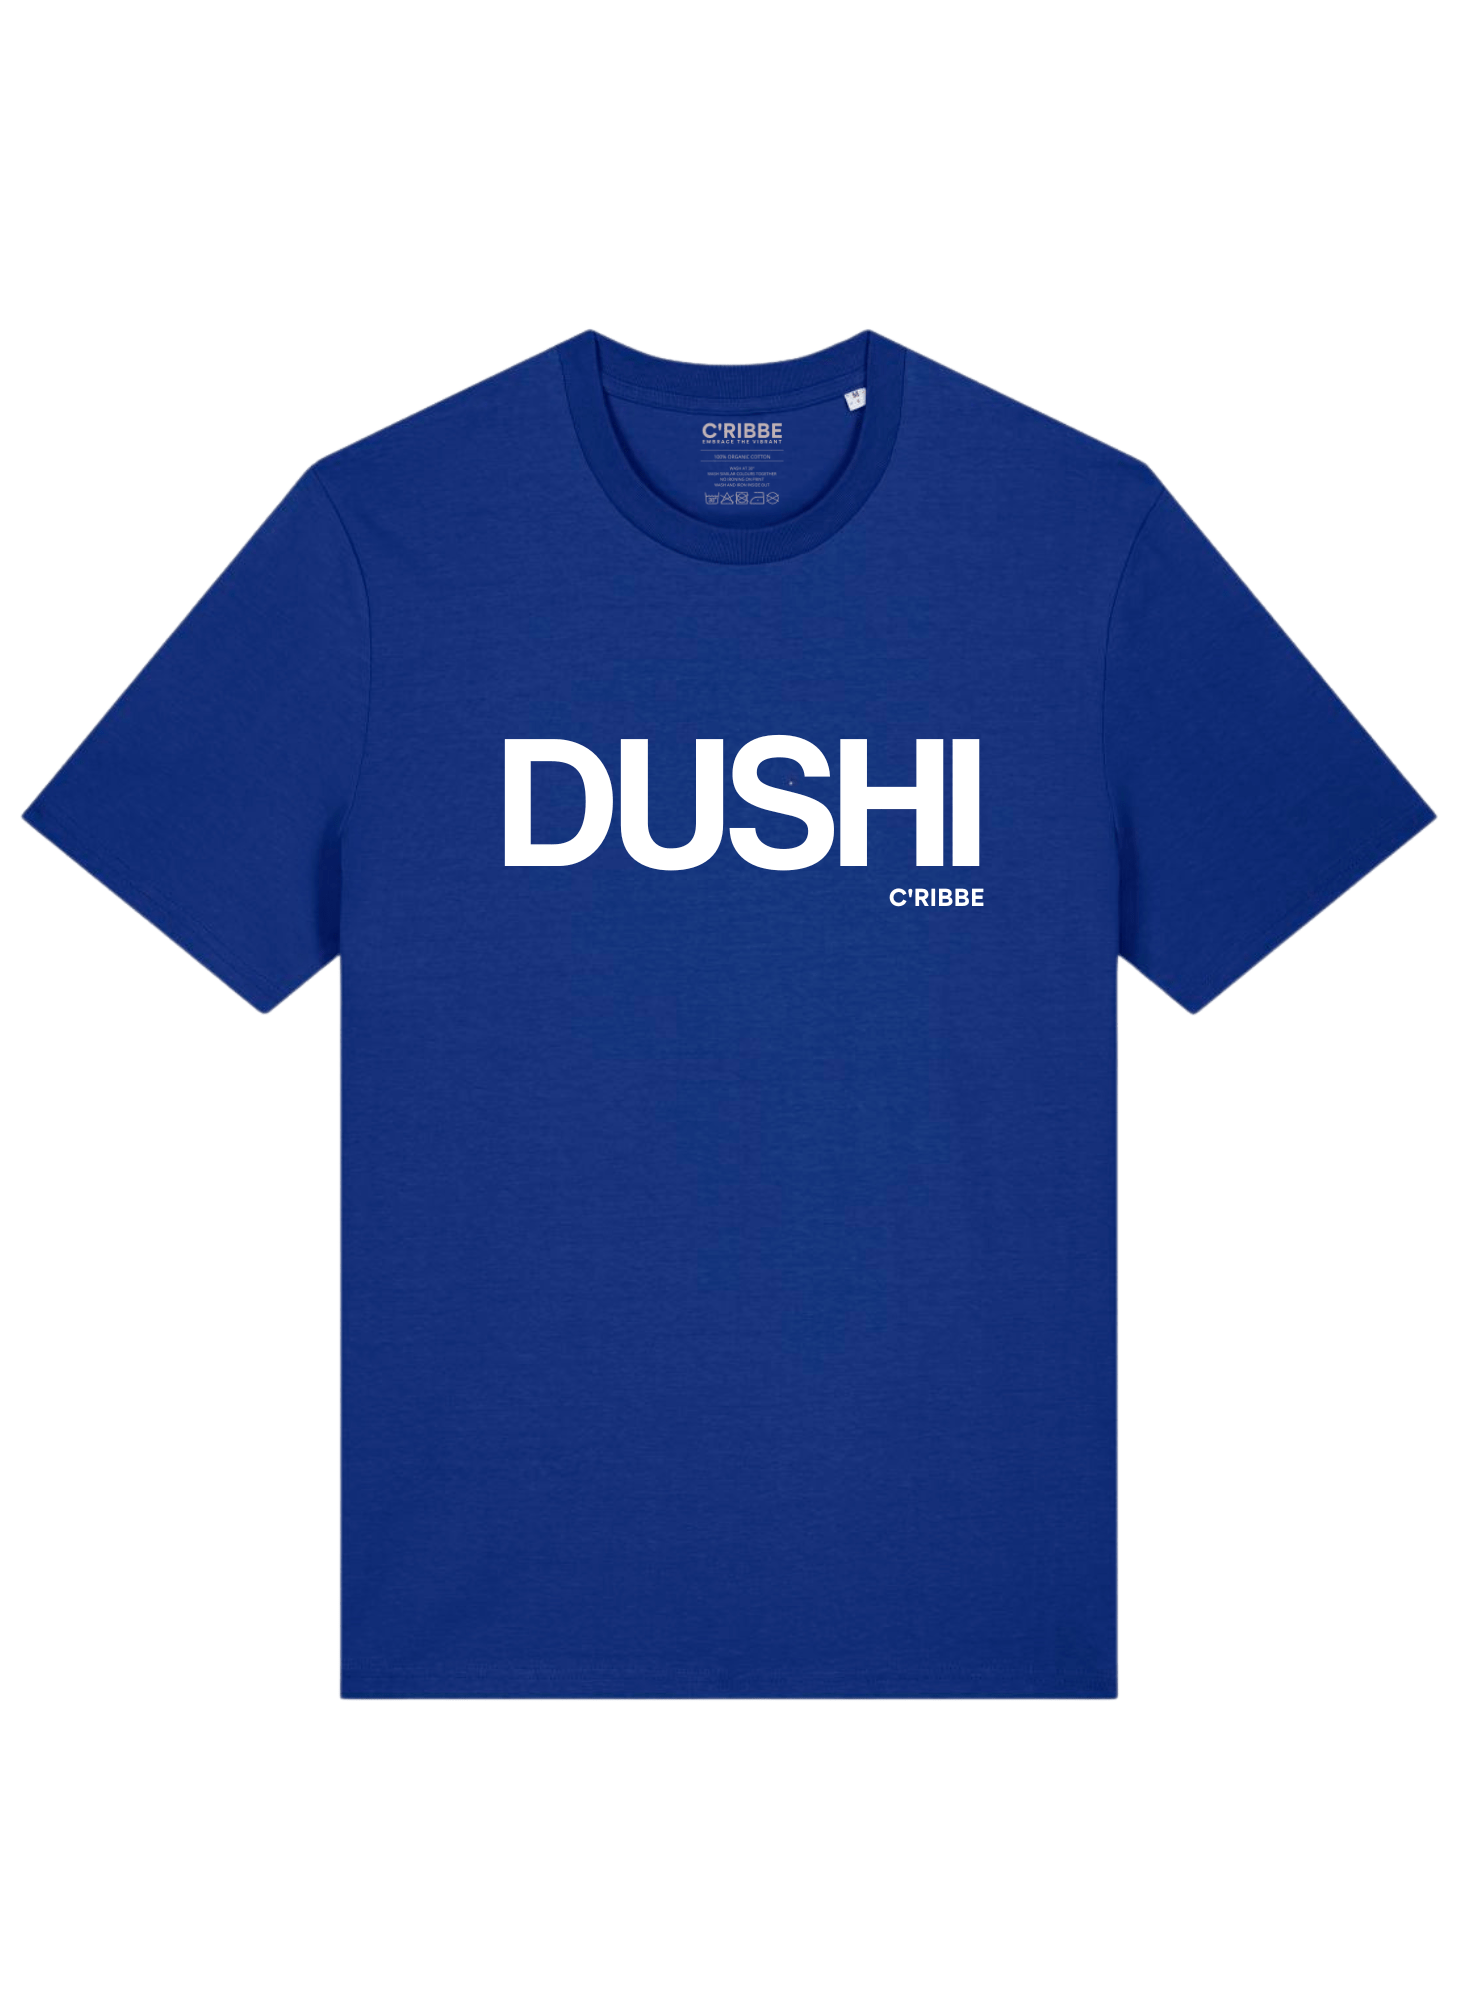 DUSHI Print Unisex T-Shirt, Red